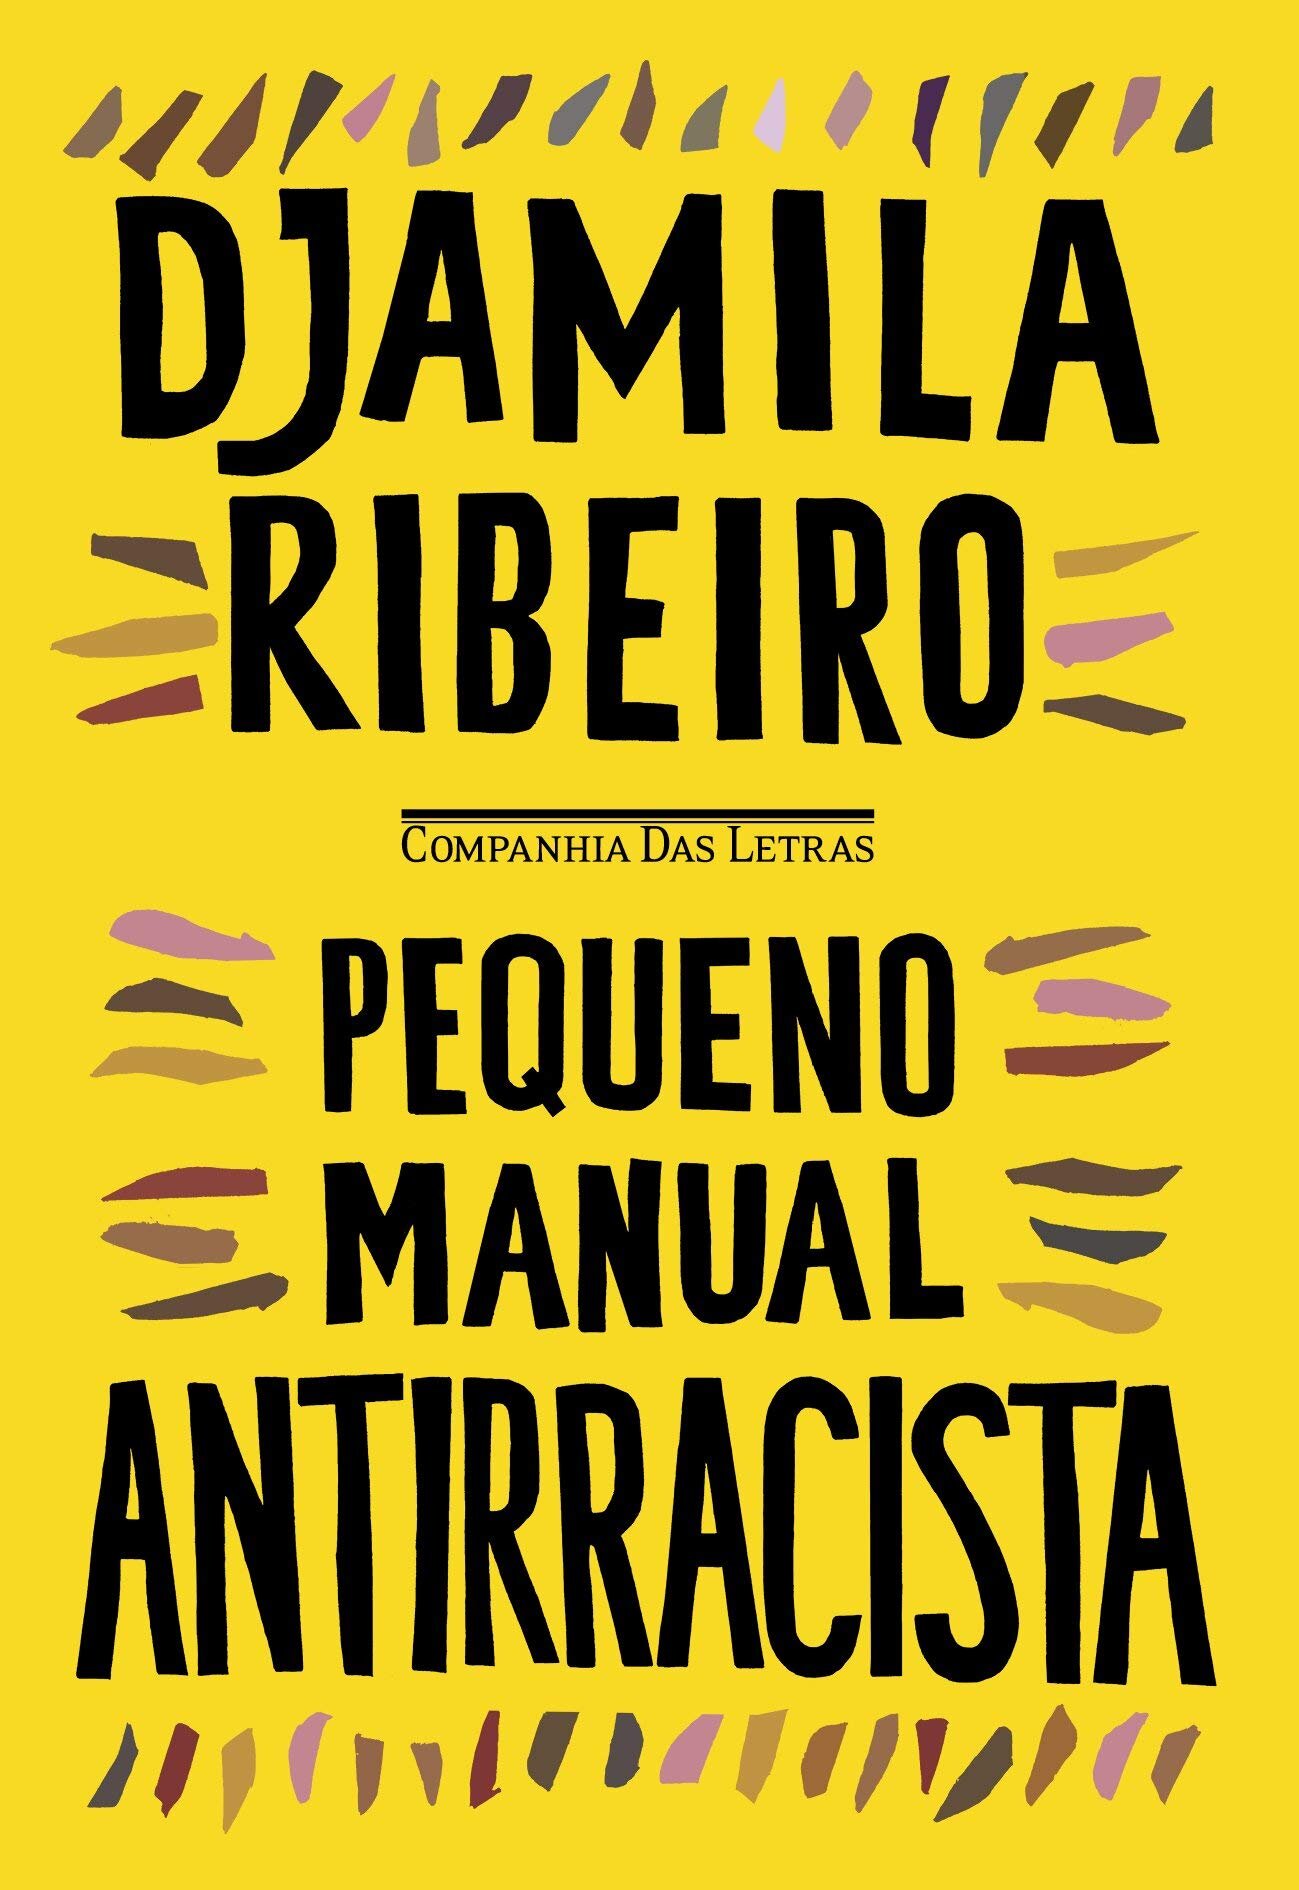 Pequeno manual antirracista - Djamila Ribeiro.jpeg